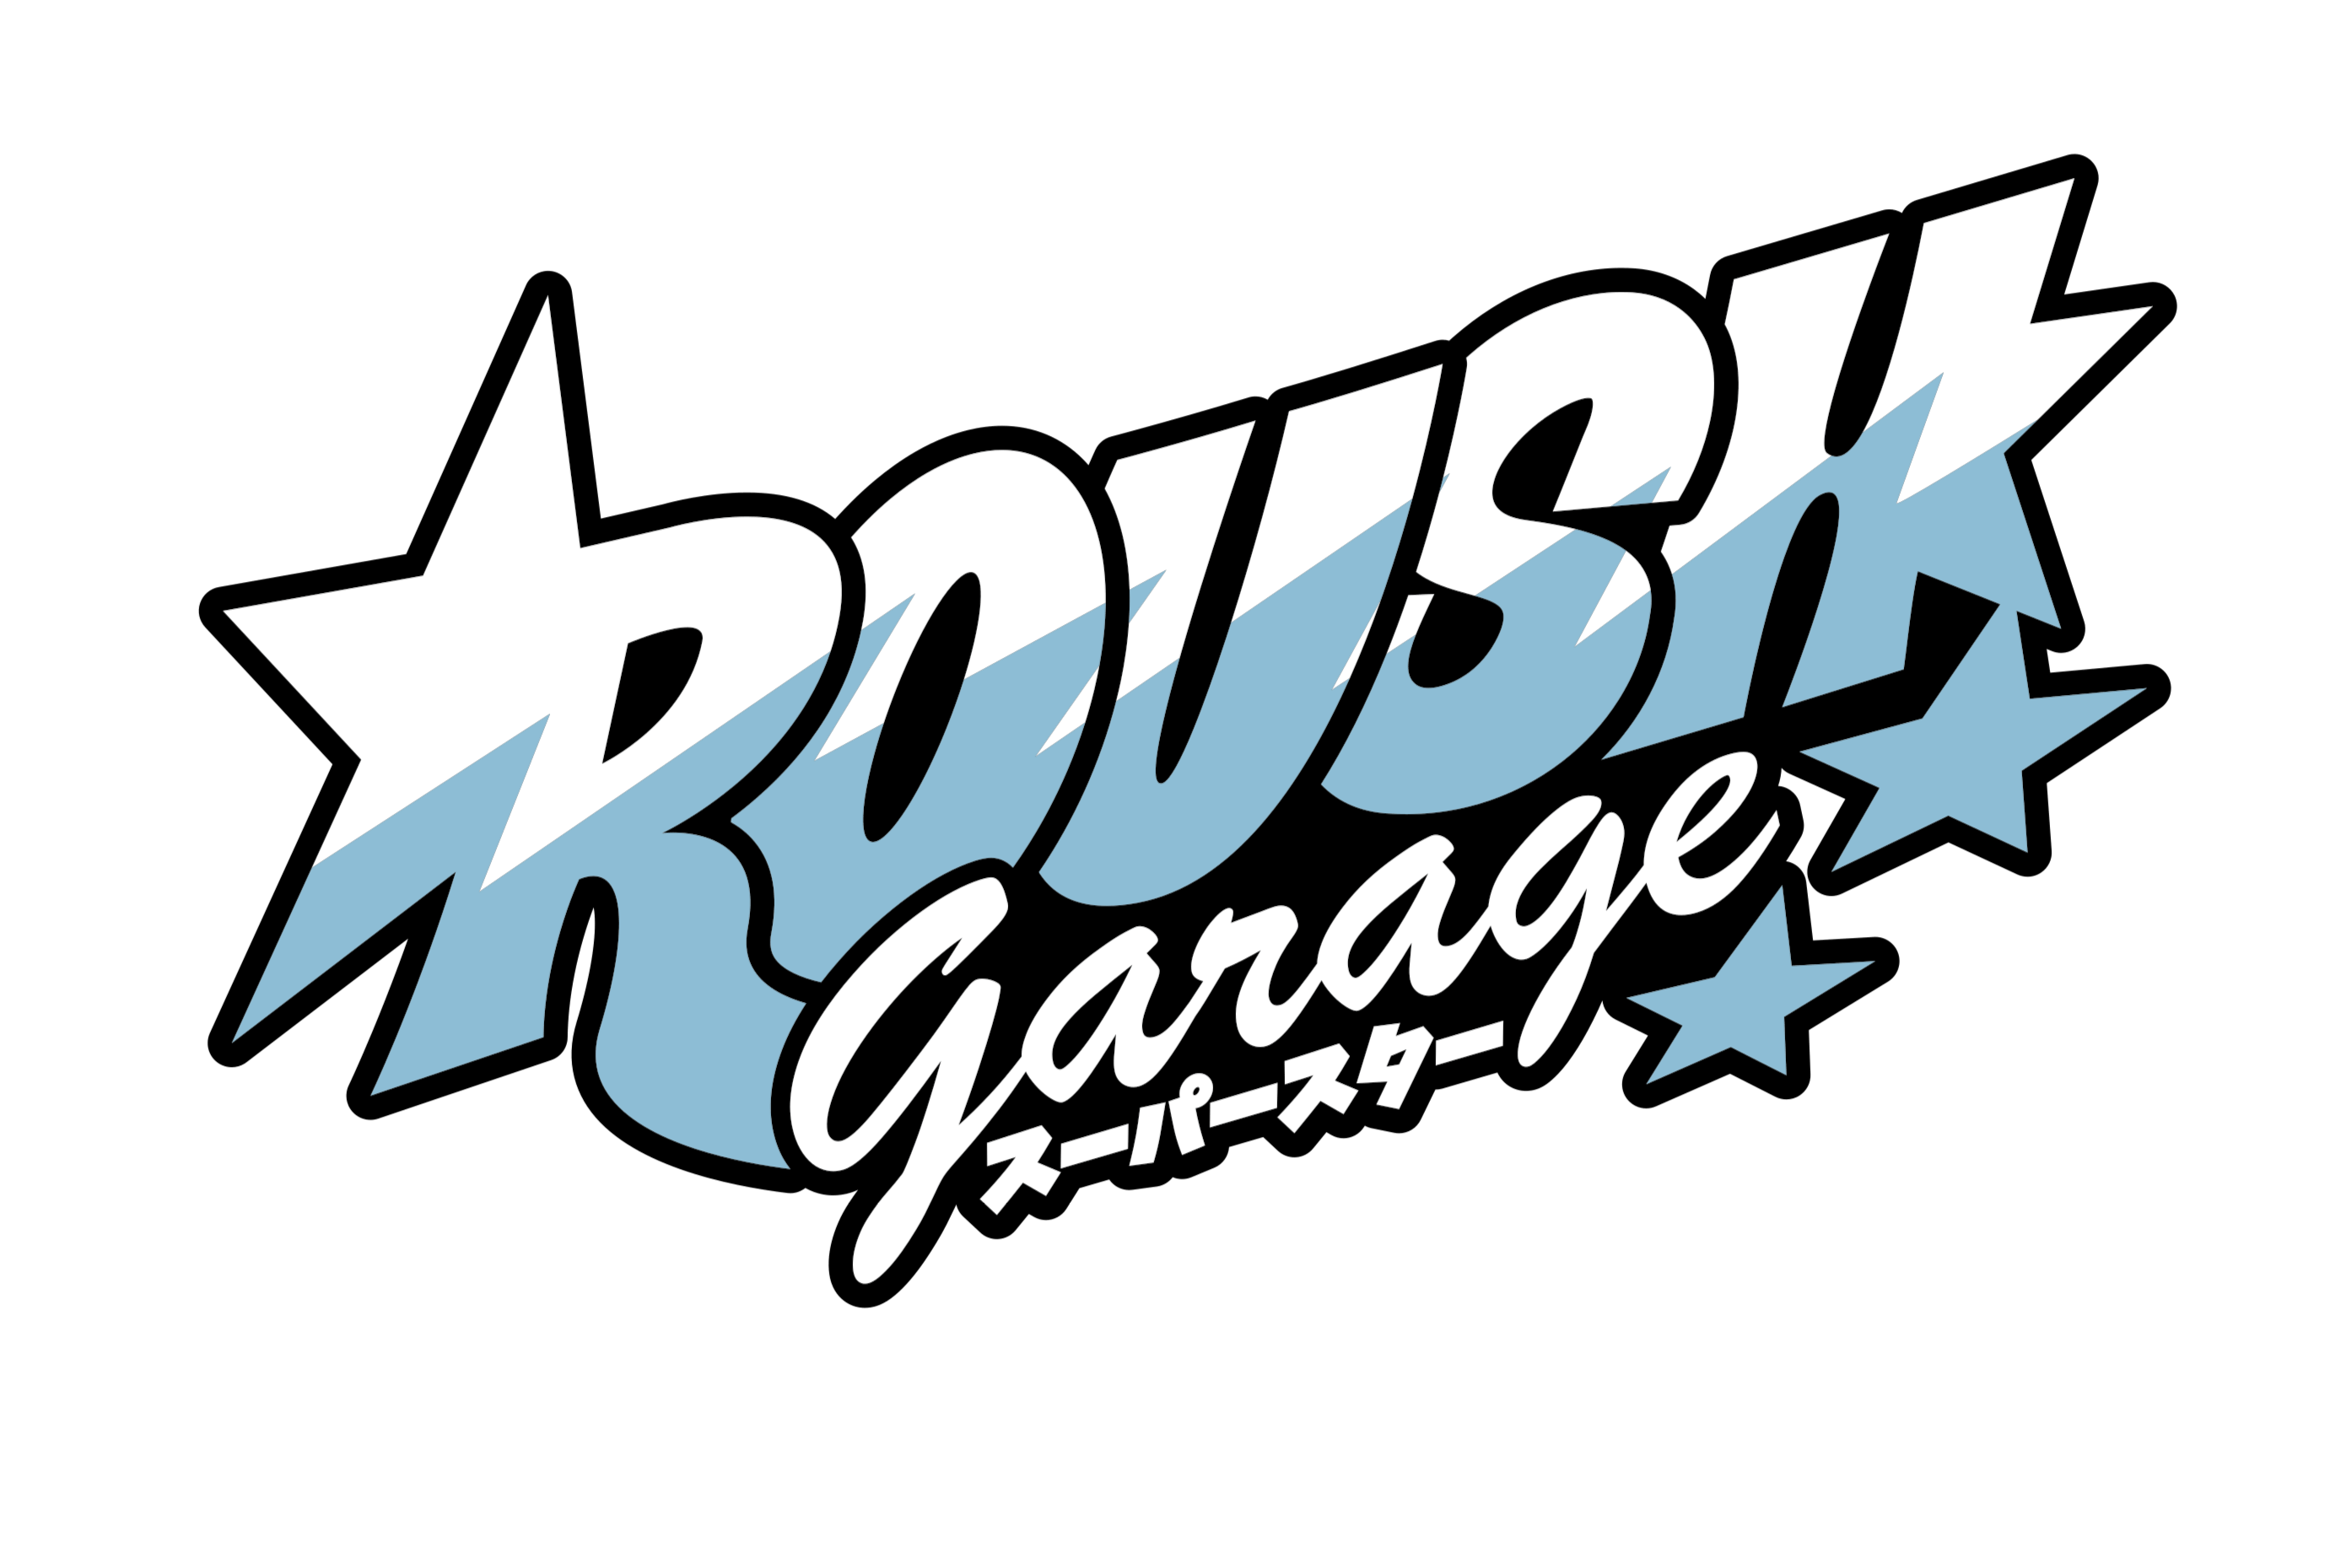 Roush Garage Logo Blue (1)